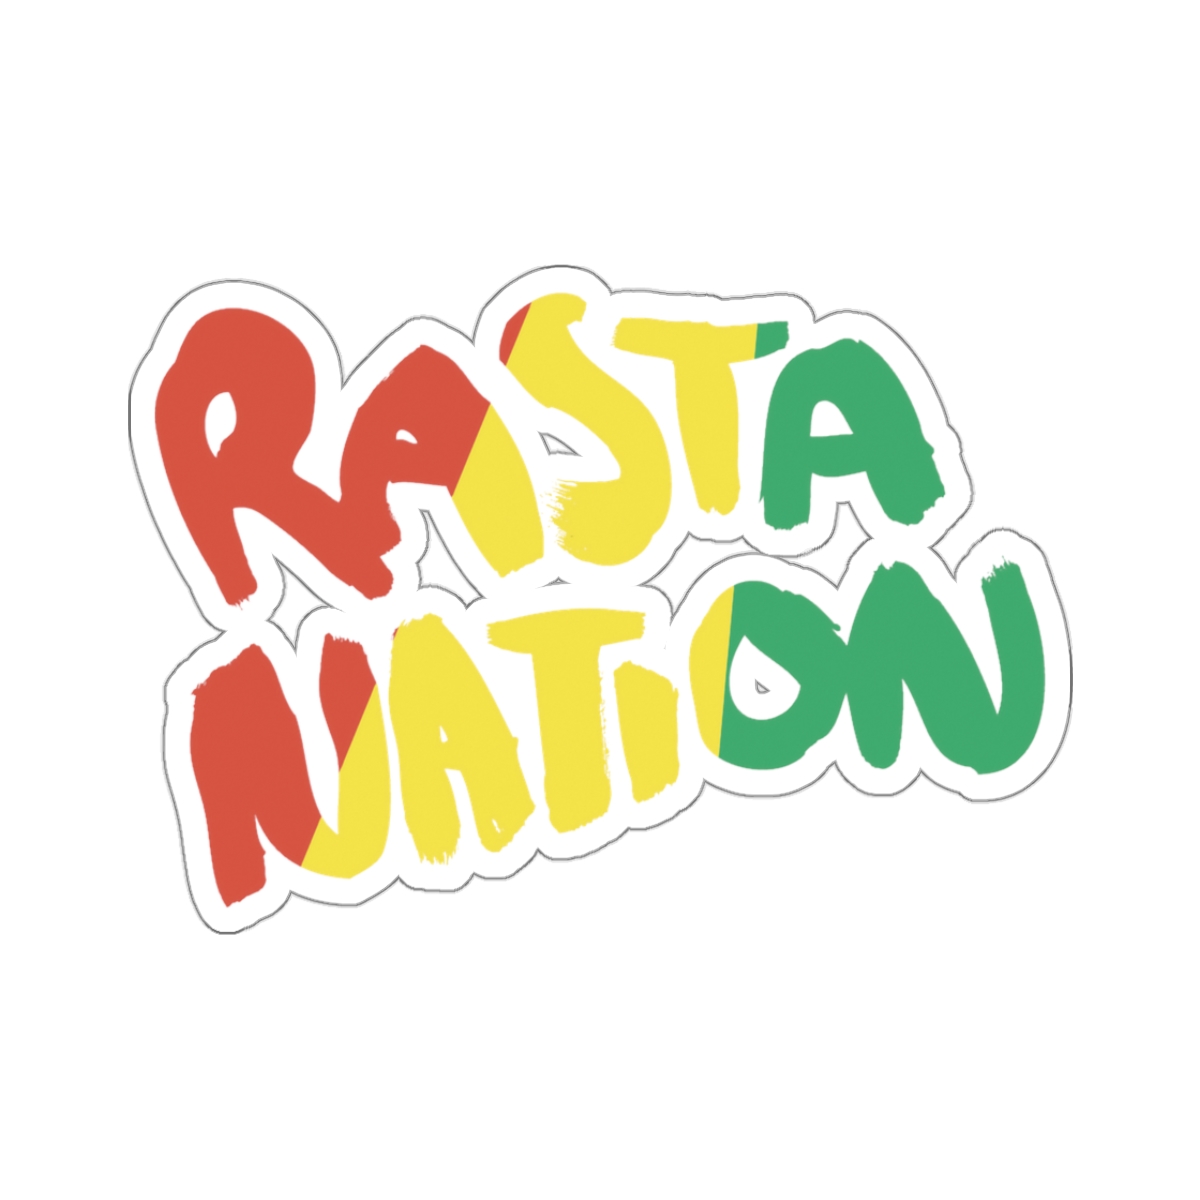 Rasta Nation Reggae Roots Sticker